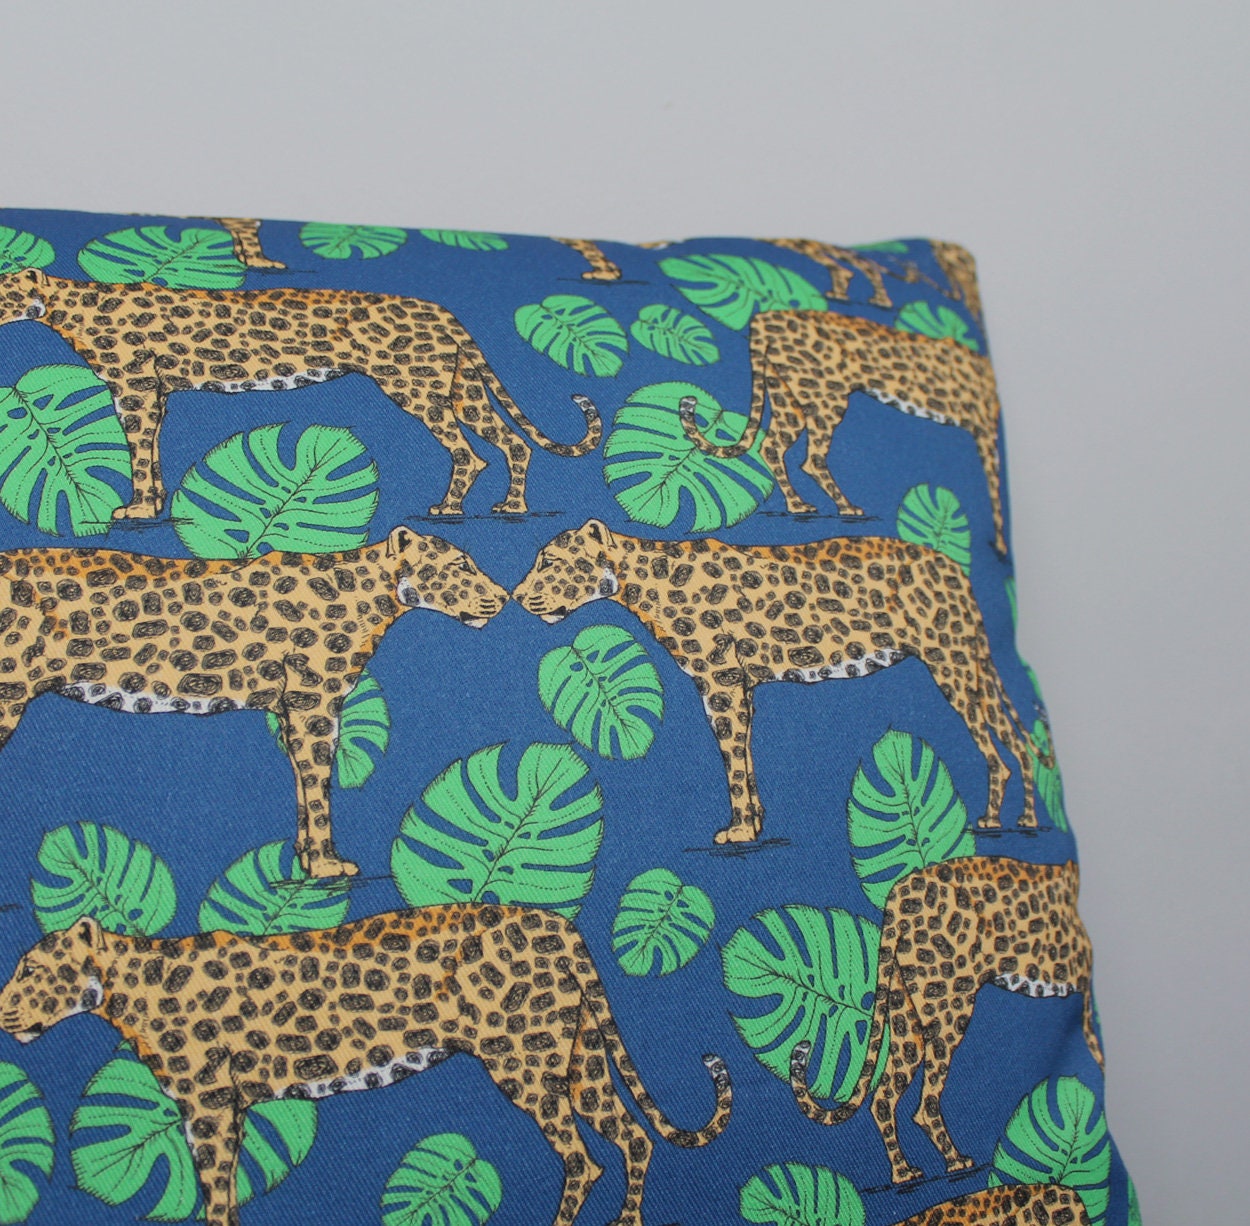 Leopard Print and Monstera Leaf Handmade Cushion. | Etsy